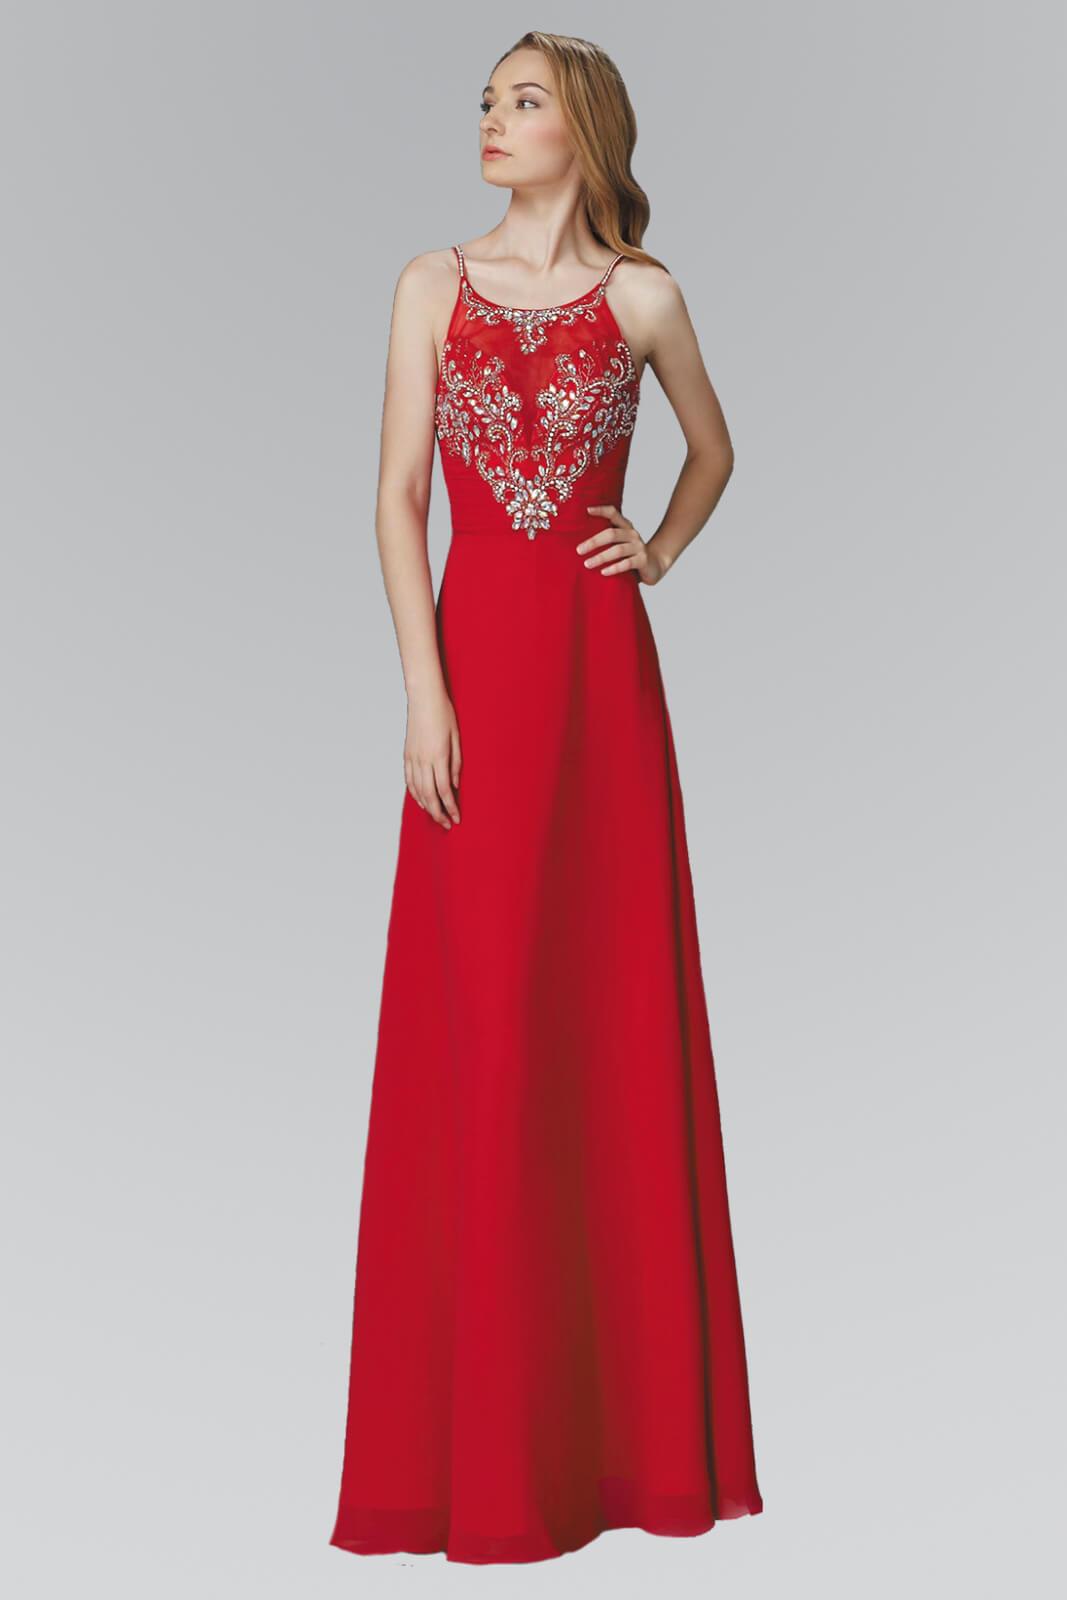 Prom Long Chiffon Spaghetti Straps Evening Formal Dress - The Dress Outlet Elizabeth K